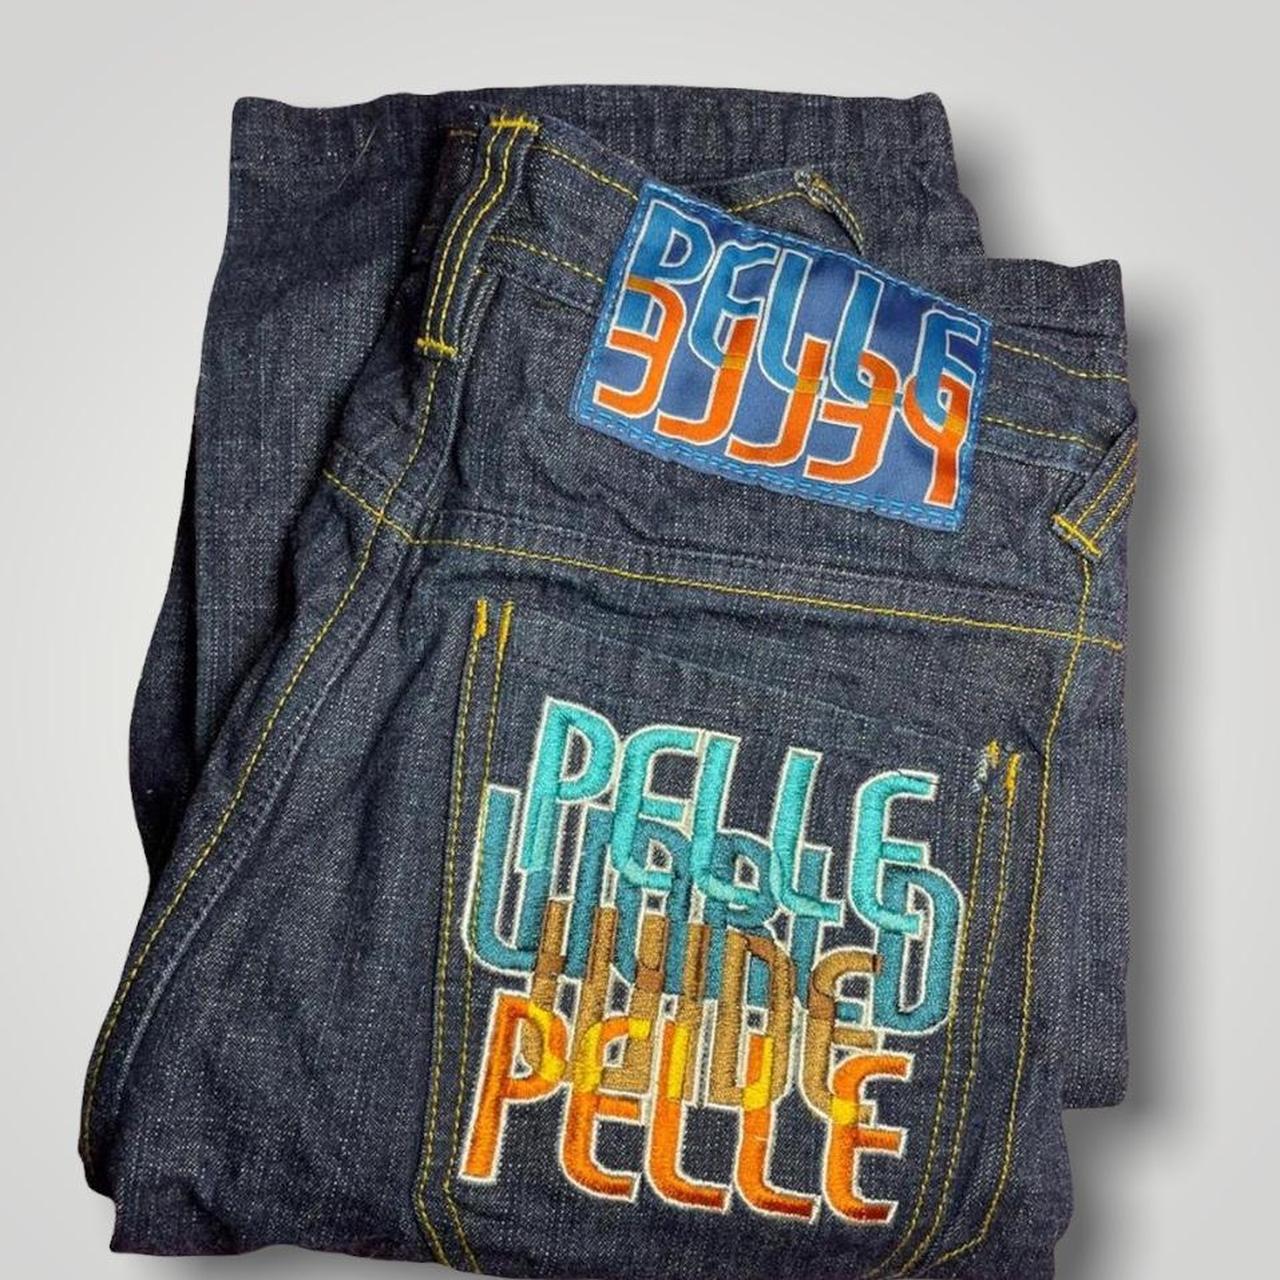 Pelle Pelle Women's Blue and Navy Jeans